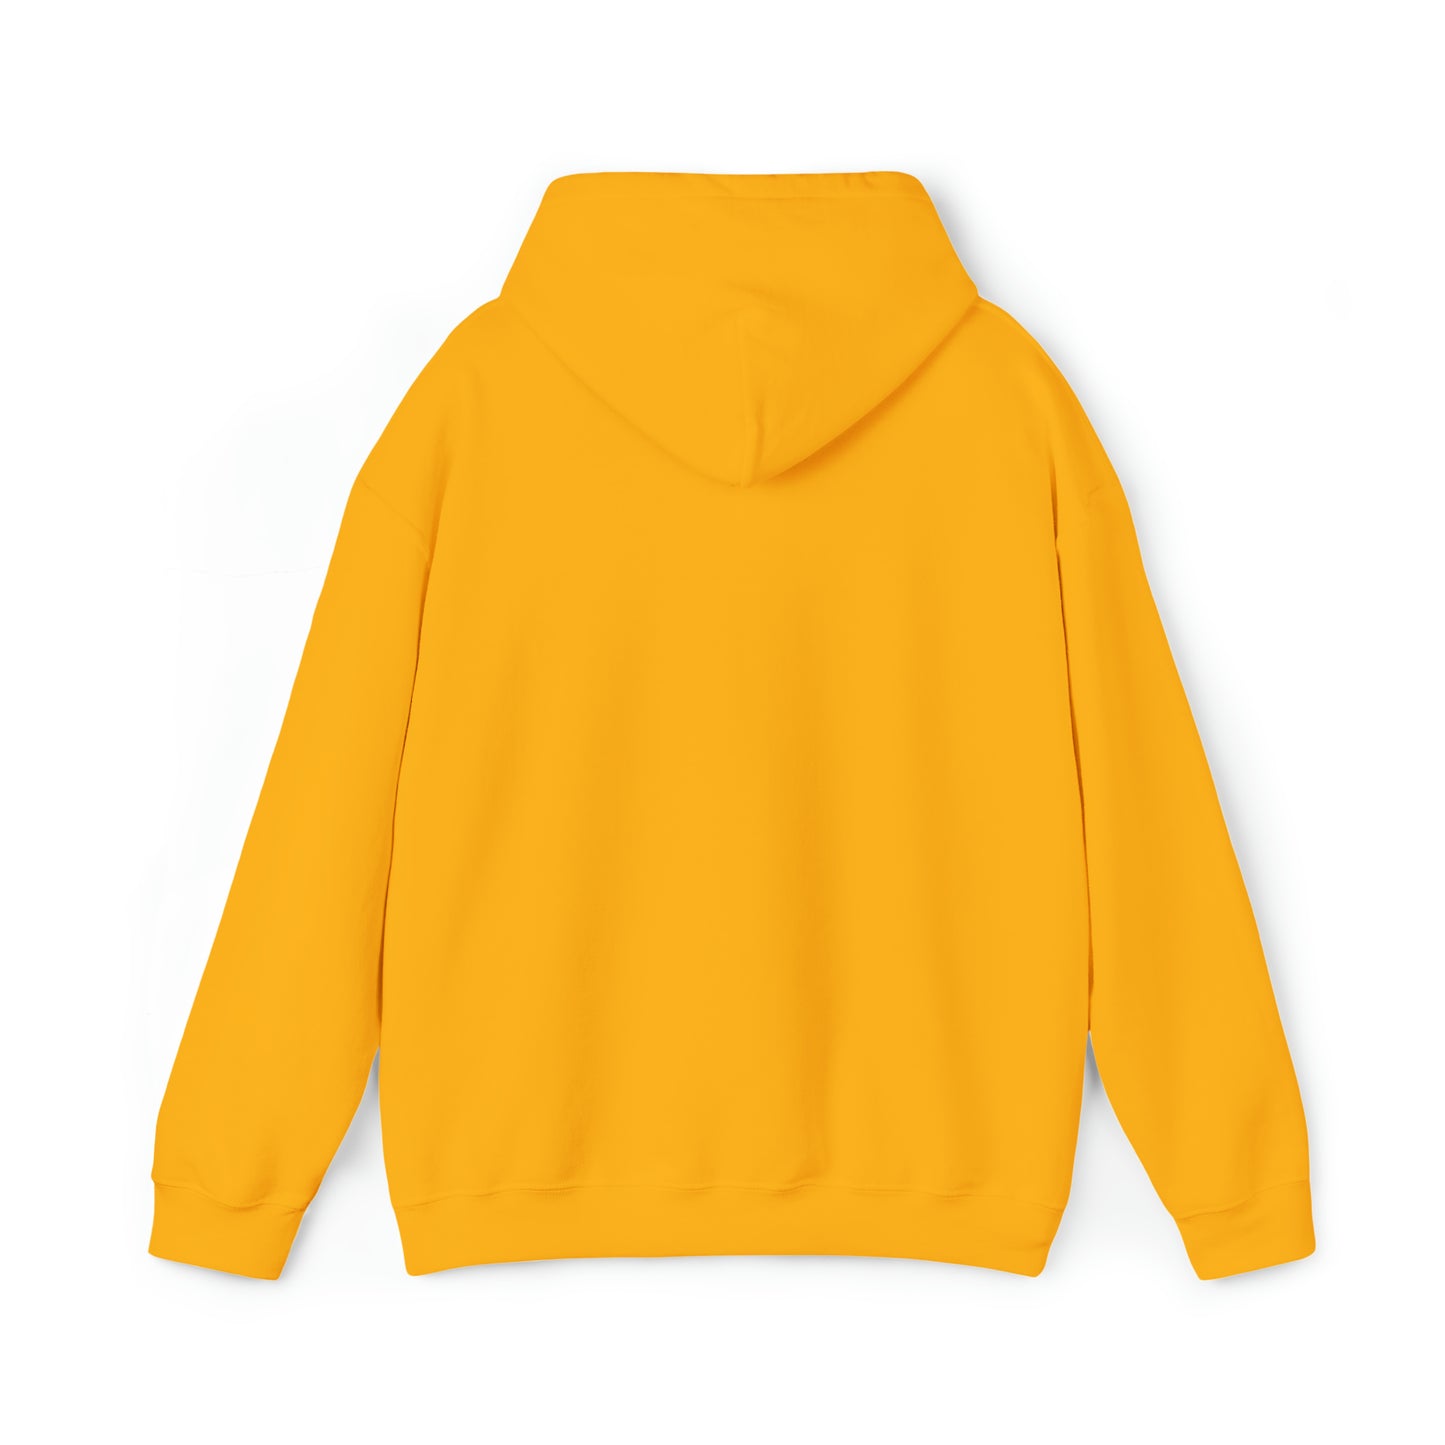 Pluck Cancer Men's Heavy Blend™ Hooded Sweatshirt - Gold